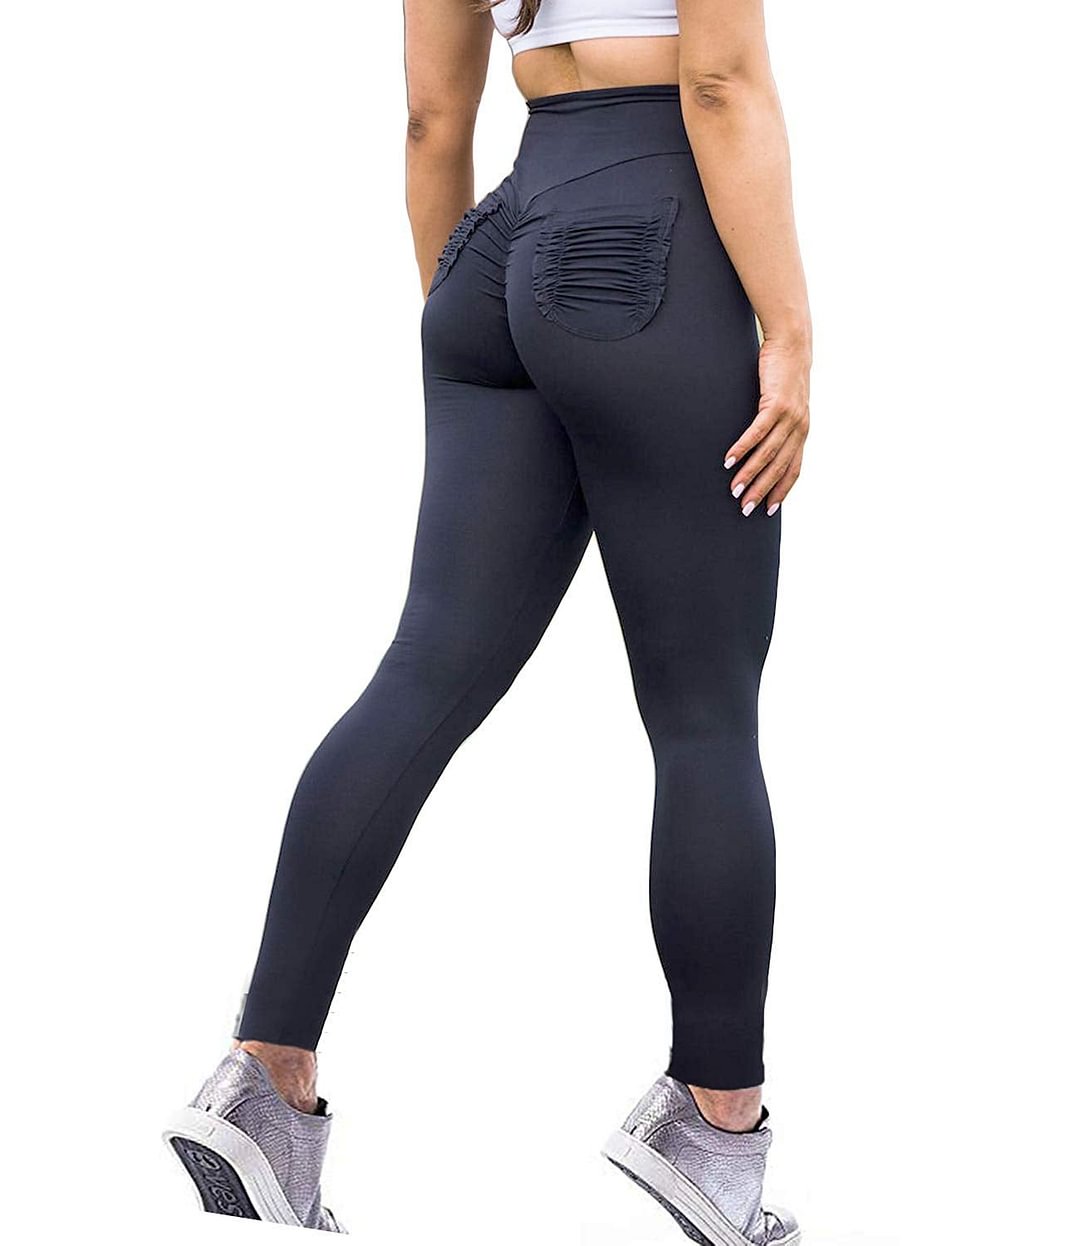 Scrunch Butt Yoga Pants High Waist Sport Workout Leggings Trousers Tummy Control Tights